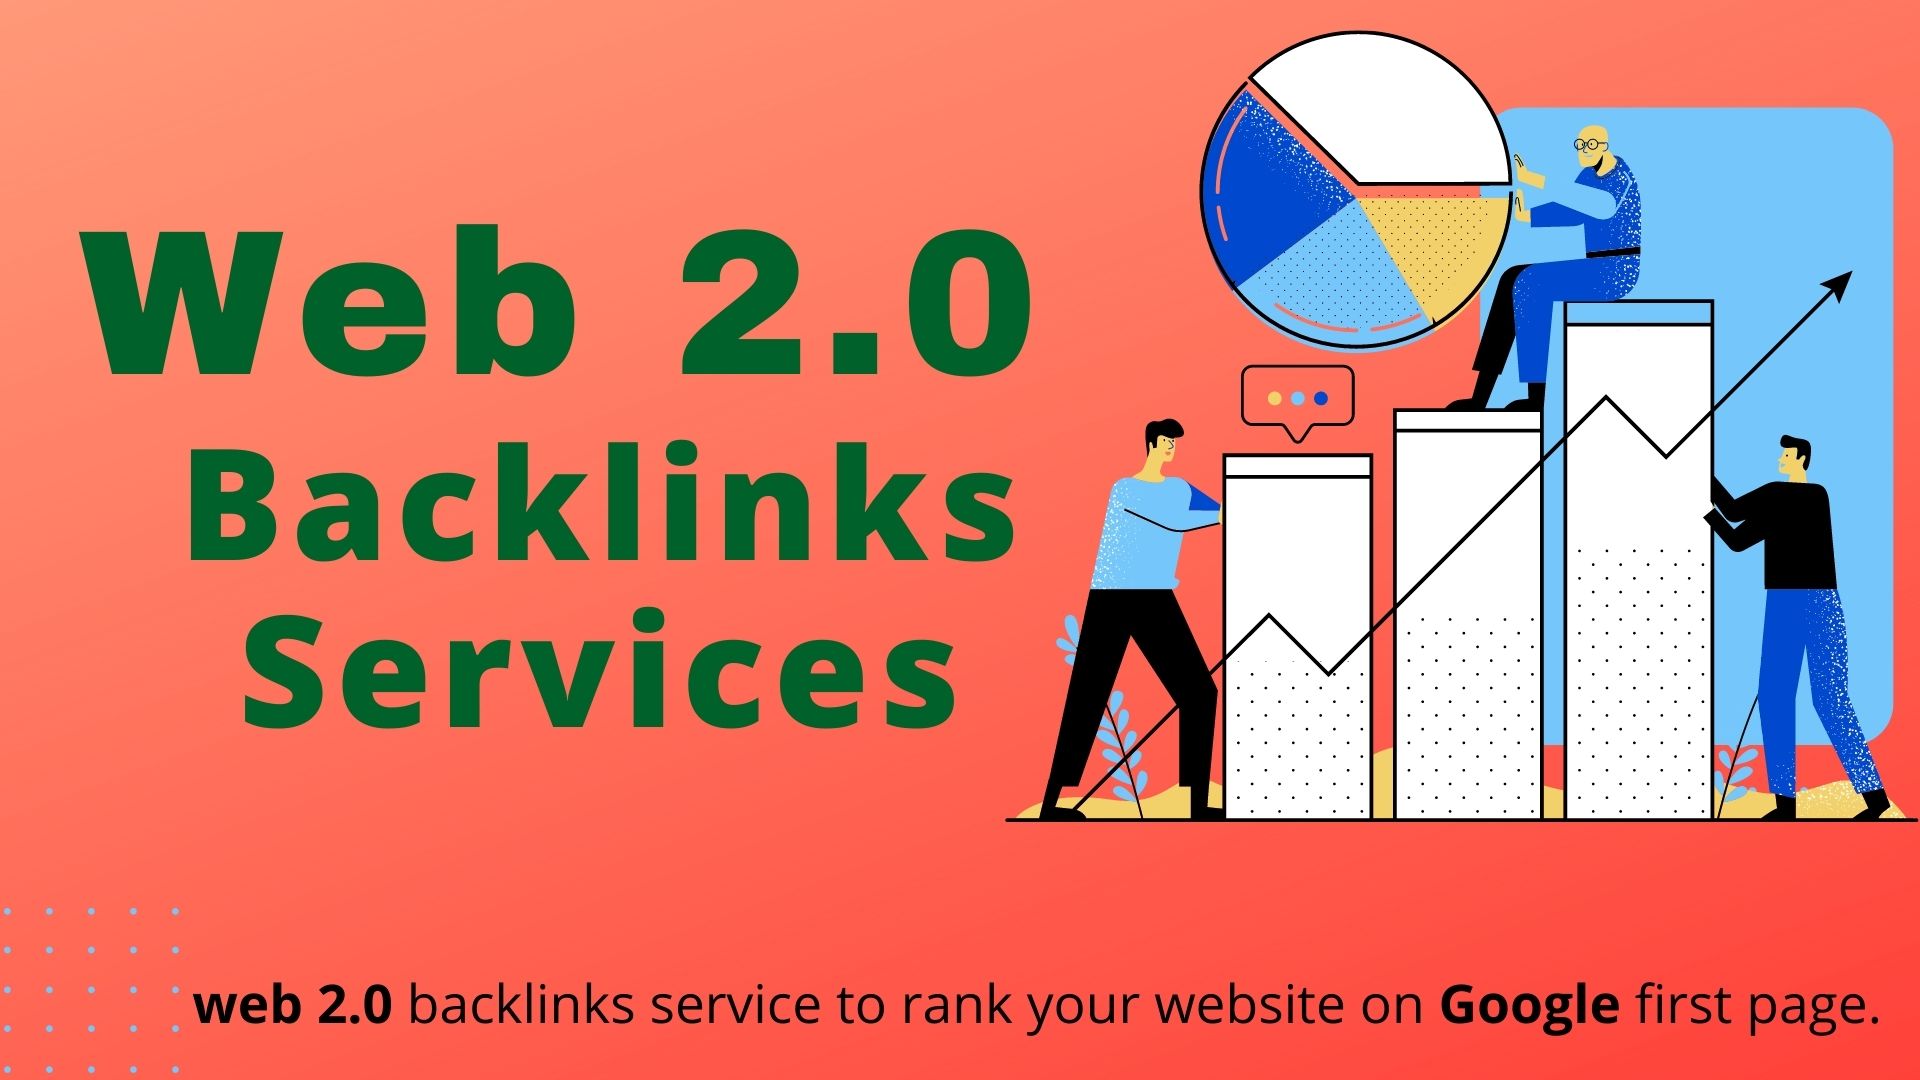 I Will Create 30 High Quality Web 2.0 Backlinks.